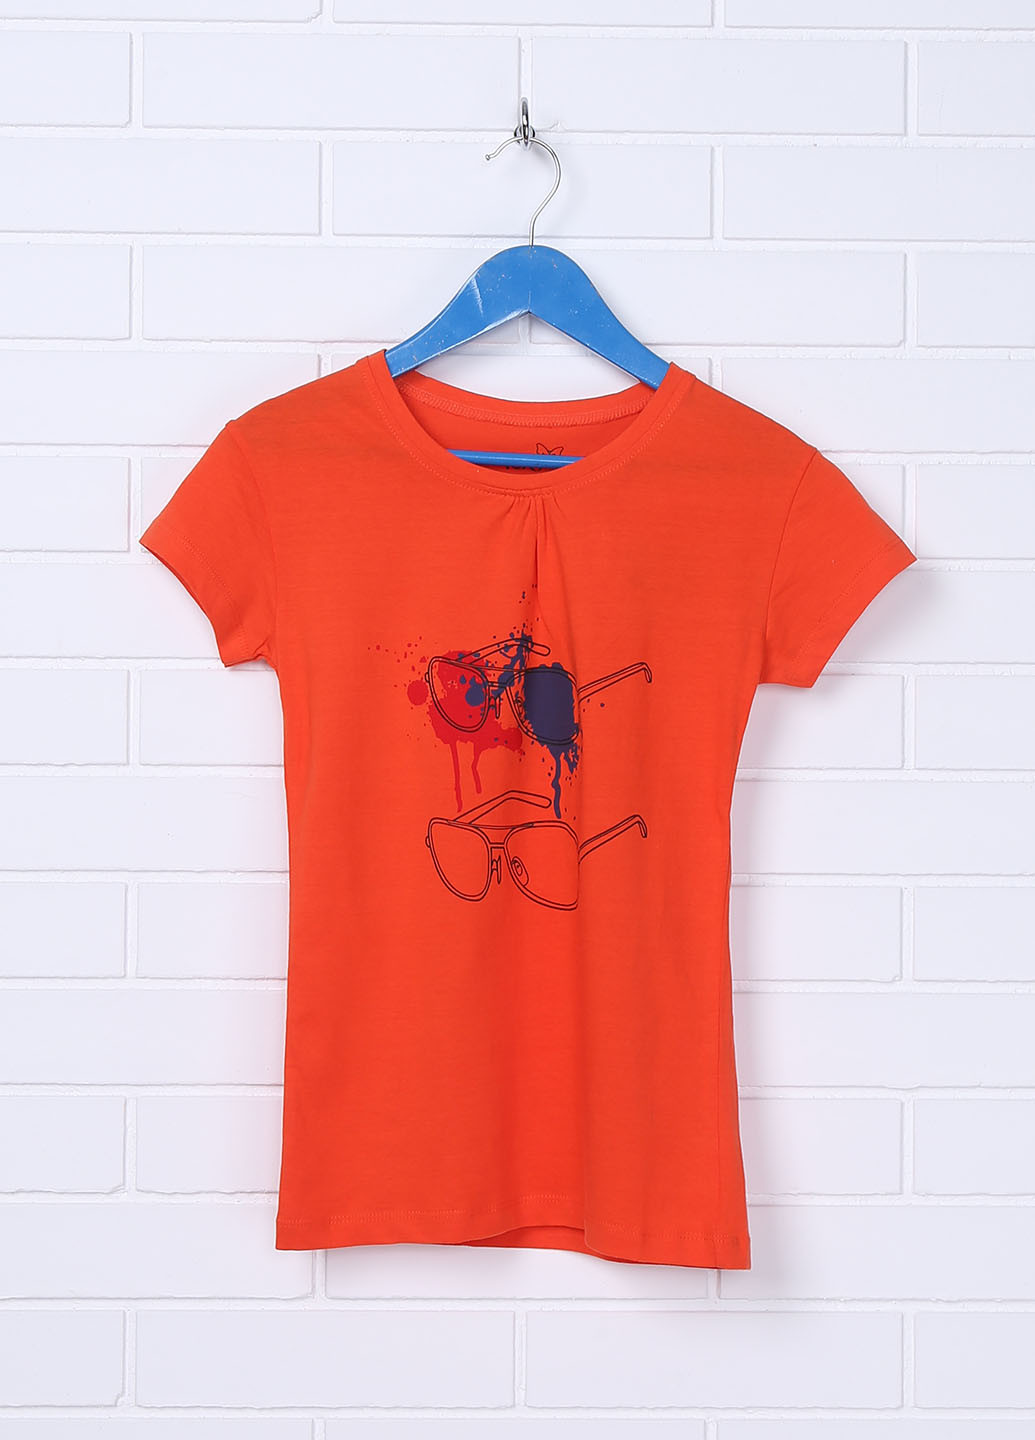 Оранжевая летняя футболка с коротким рукавом Tex